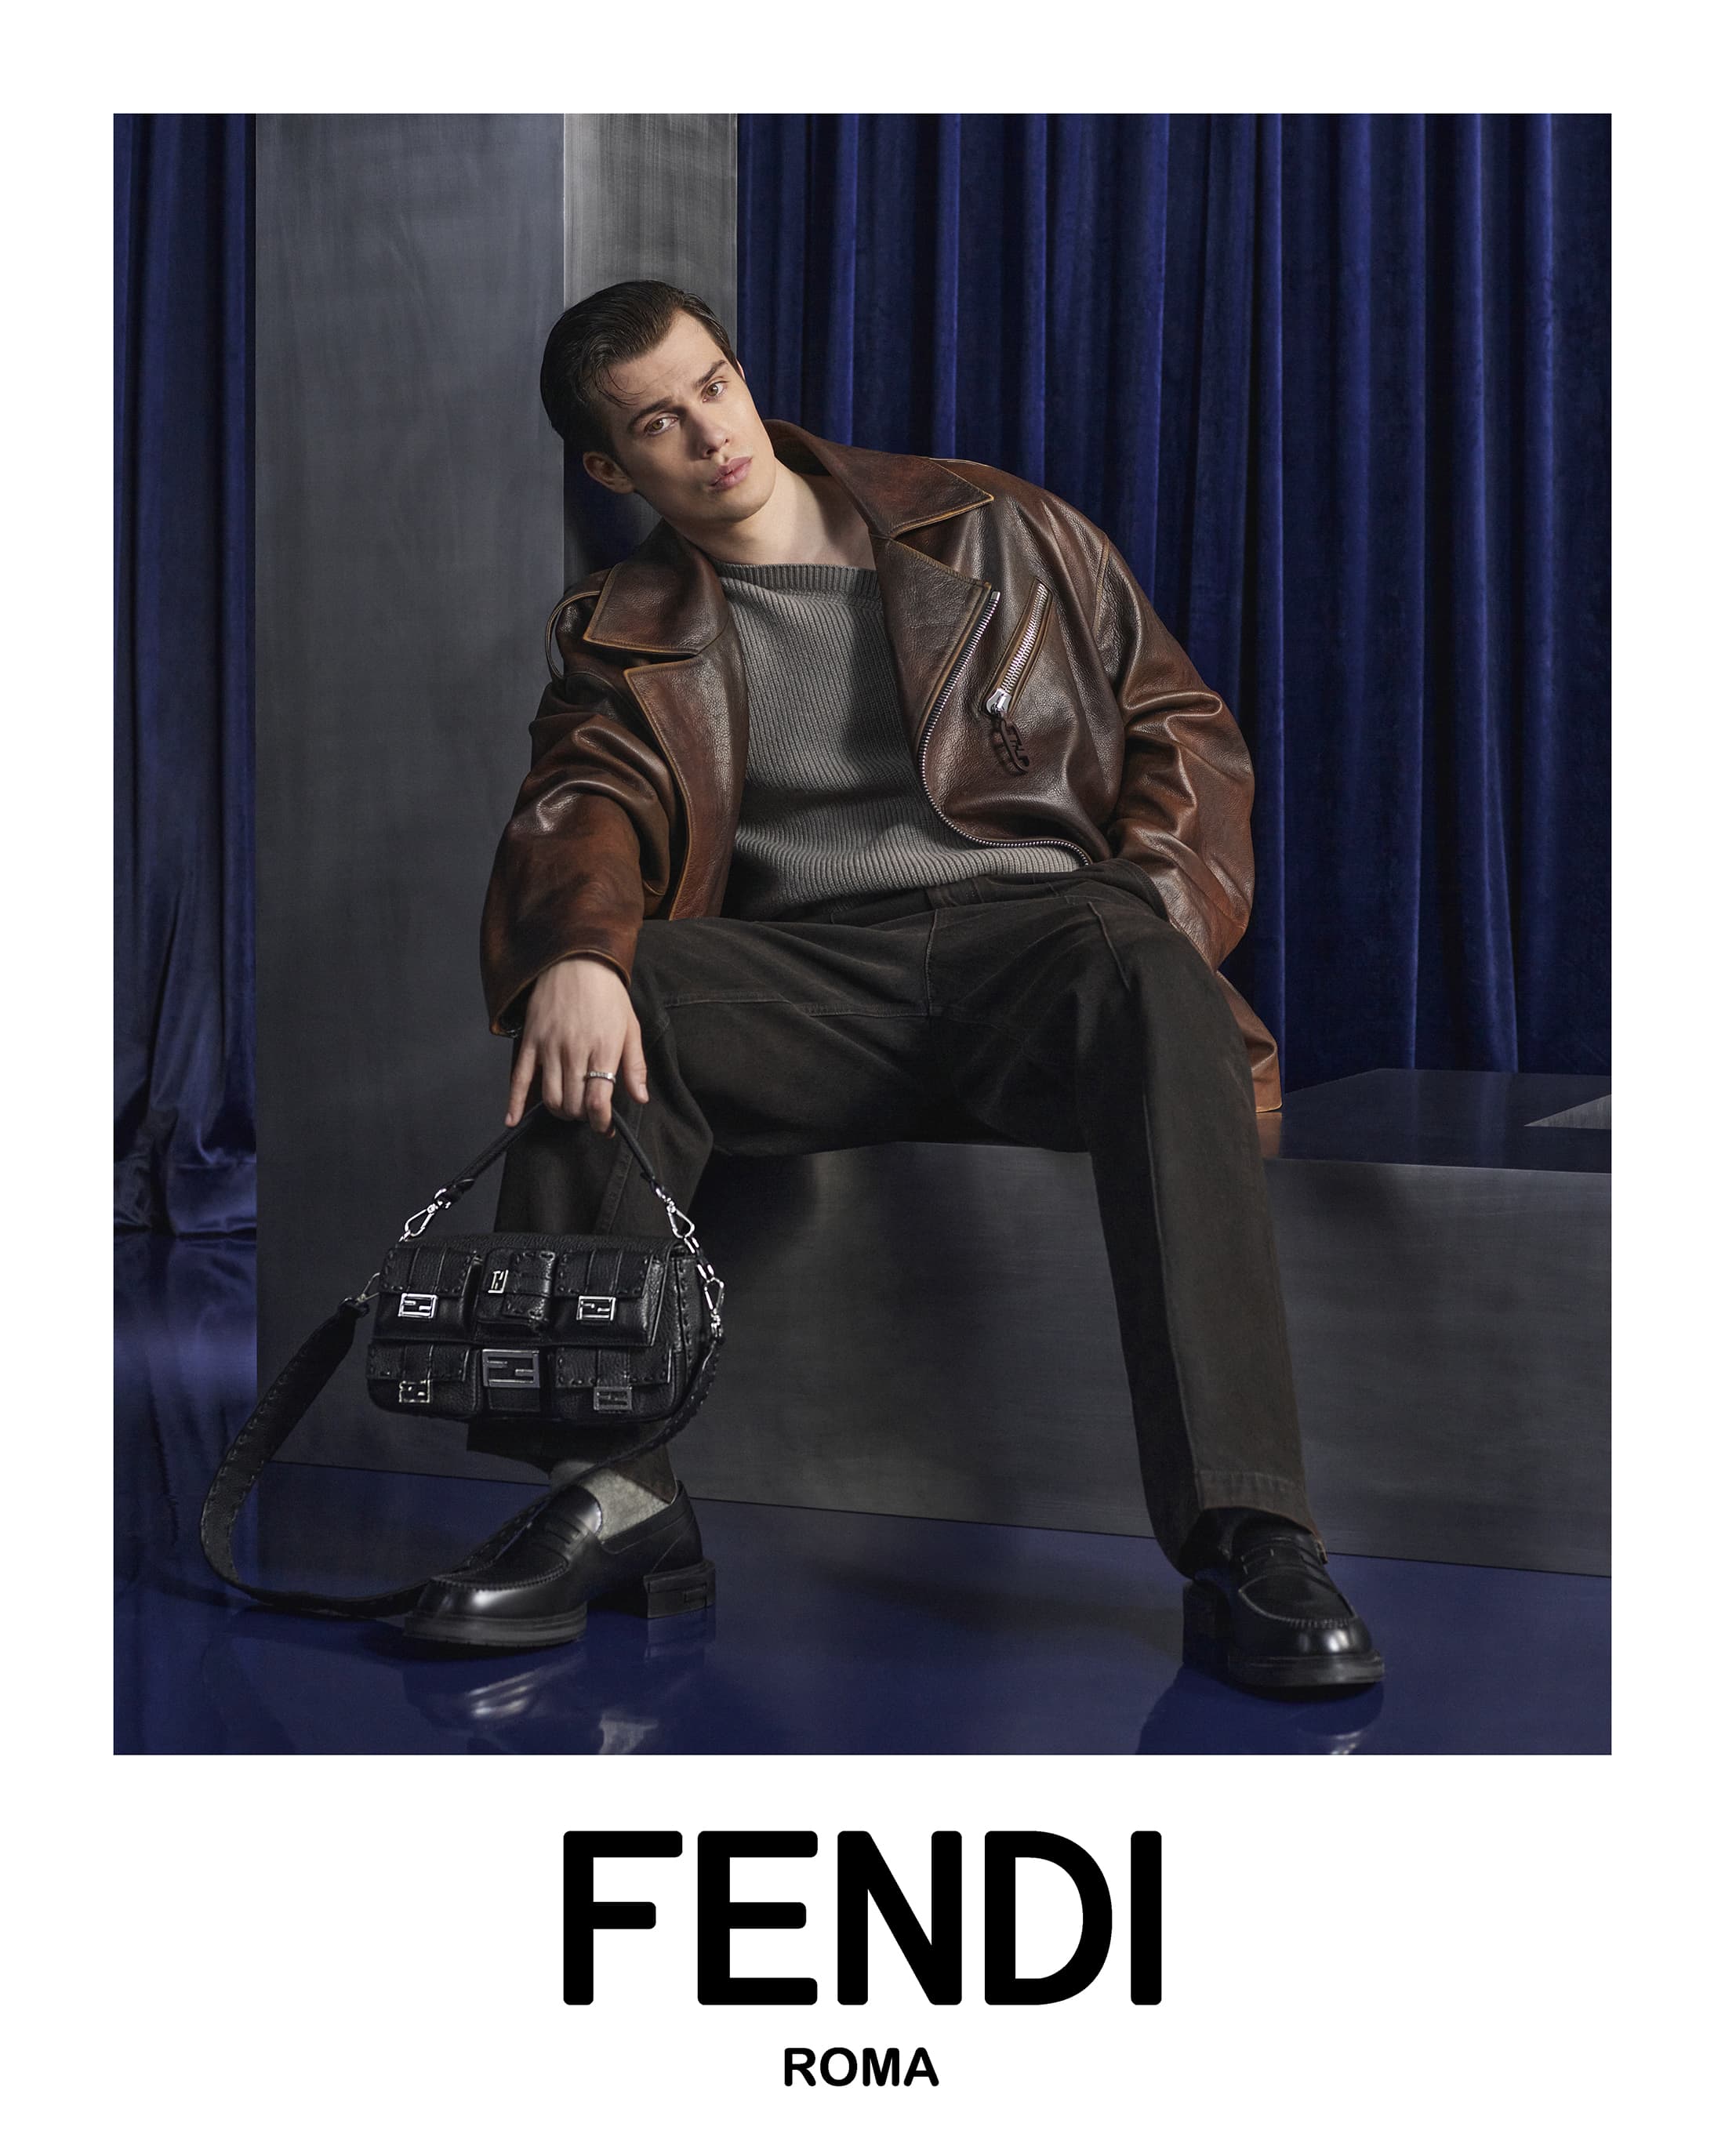 Inside Fendi's Latest Art Collaboration